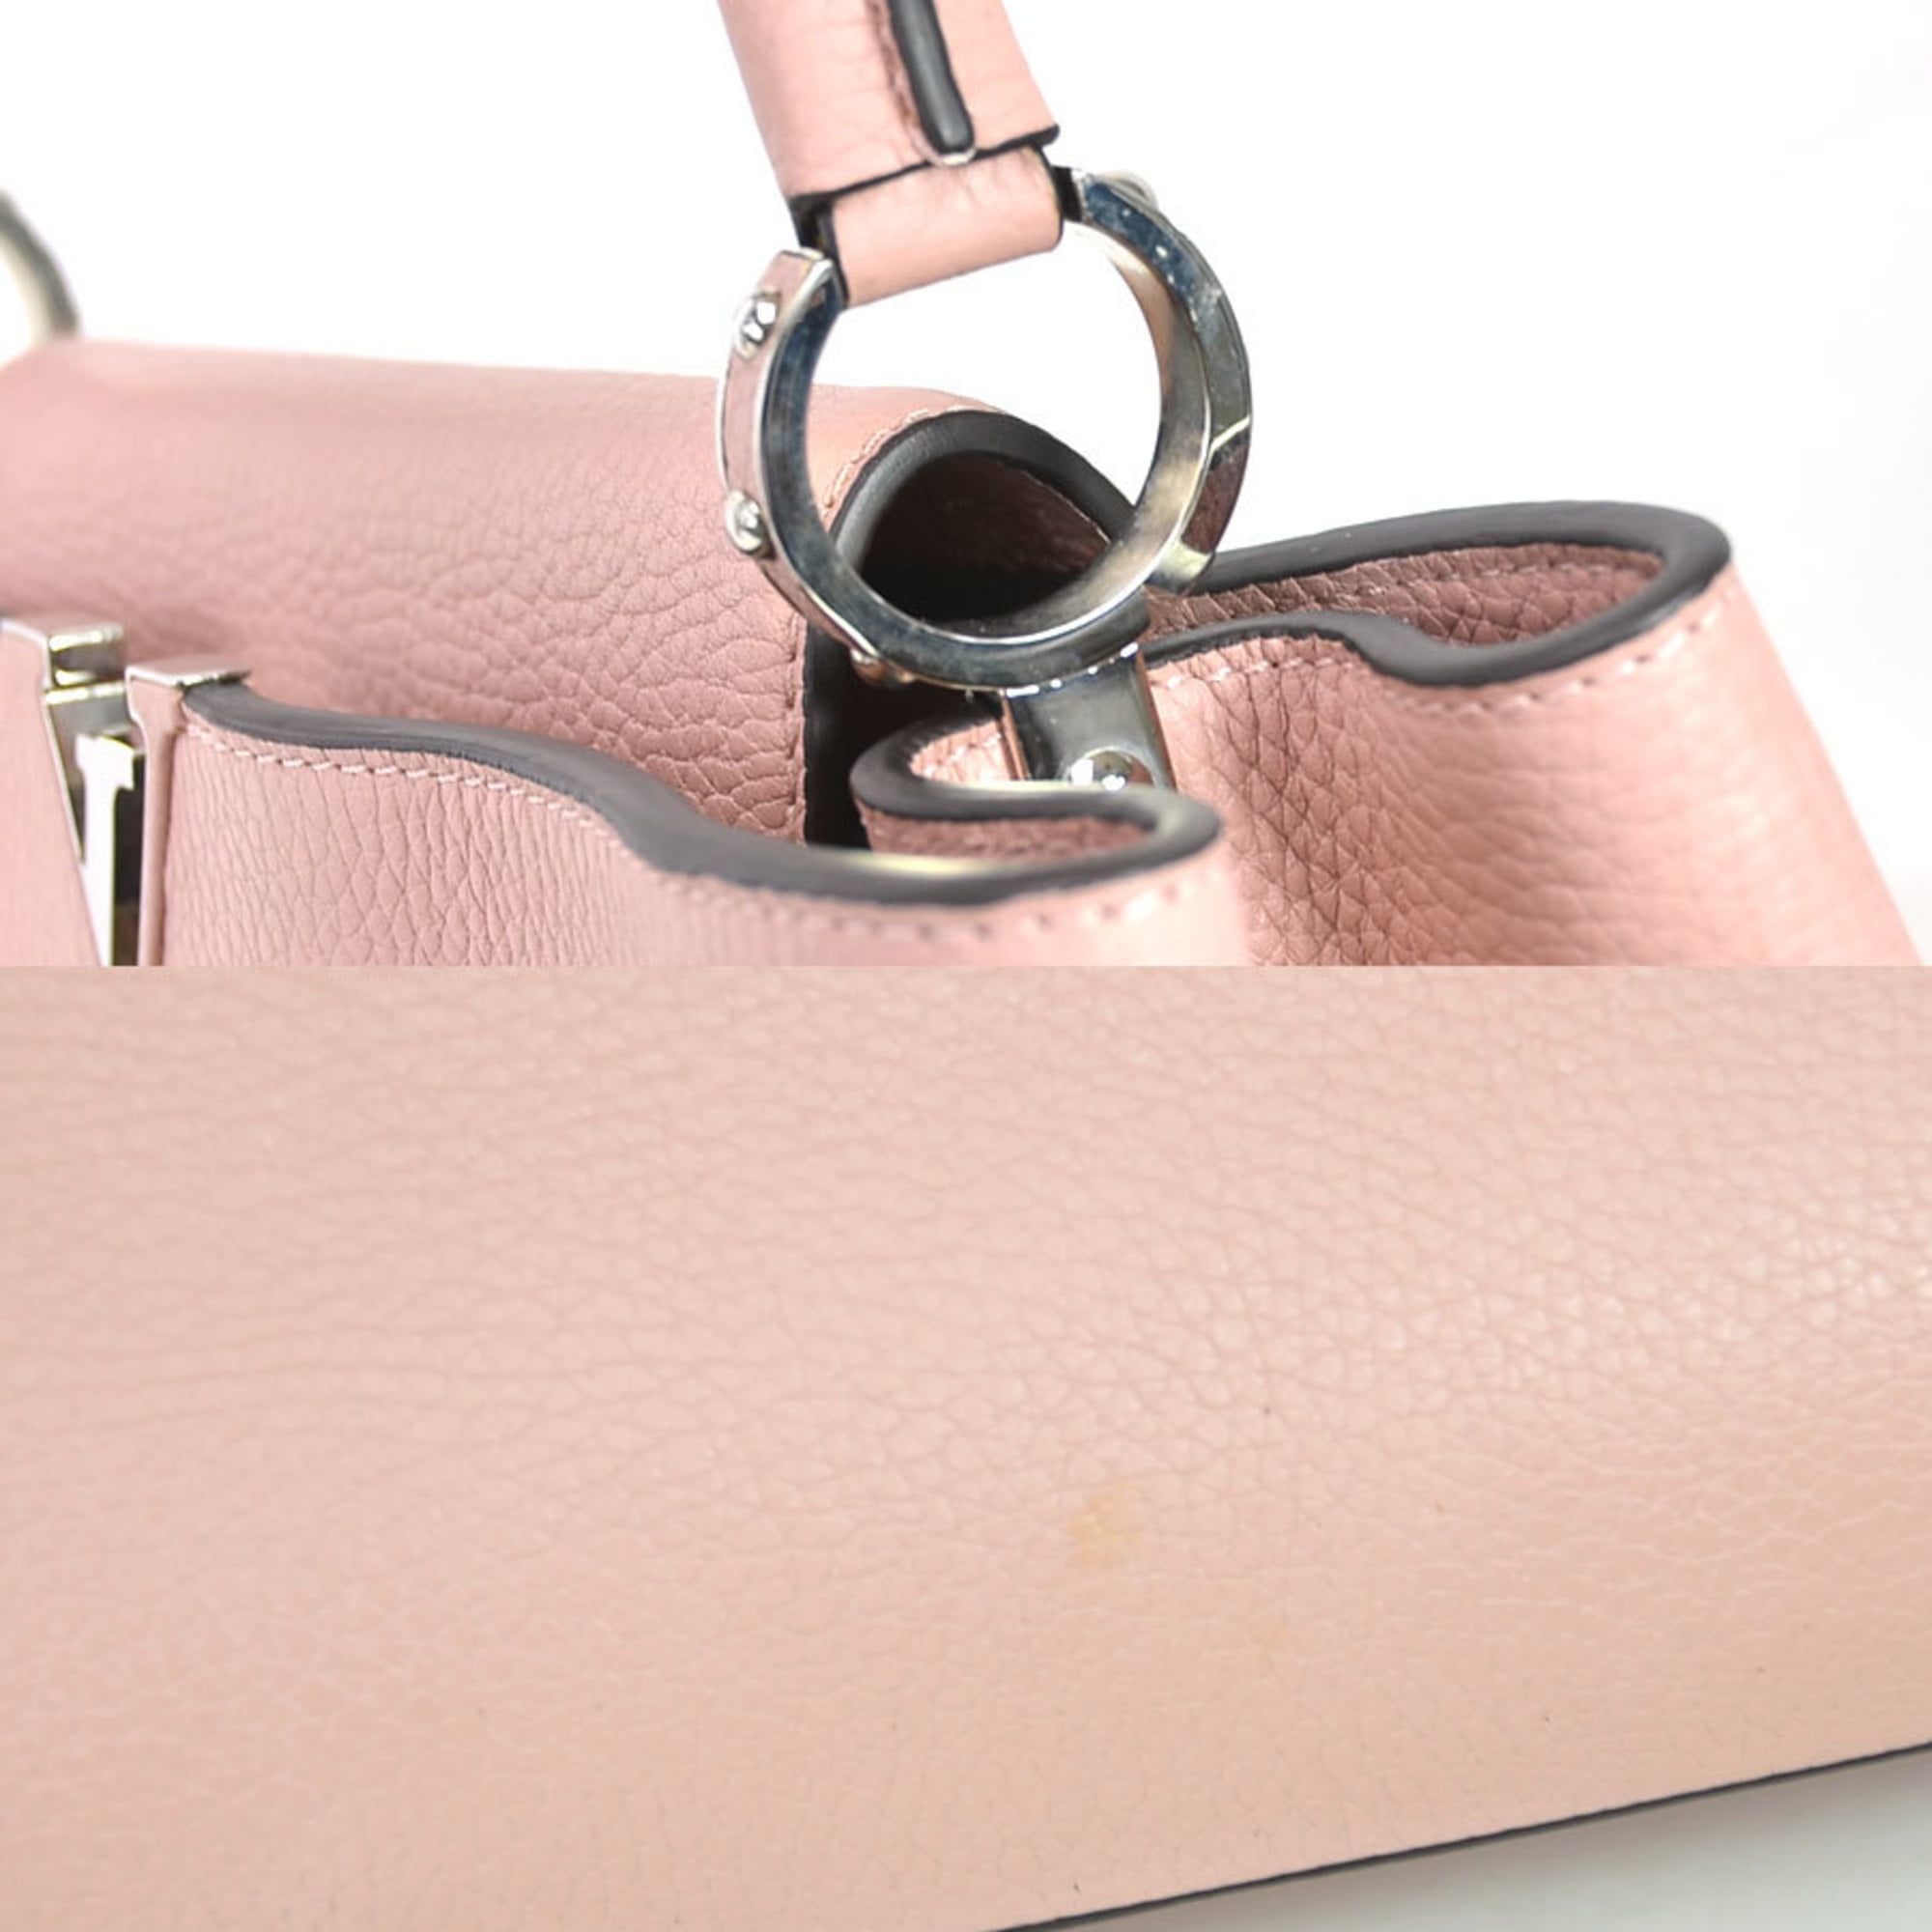 Capucines leather handbag Louis Vuitton Navy in Leather - 31220584